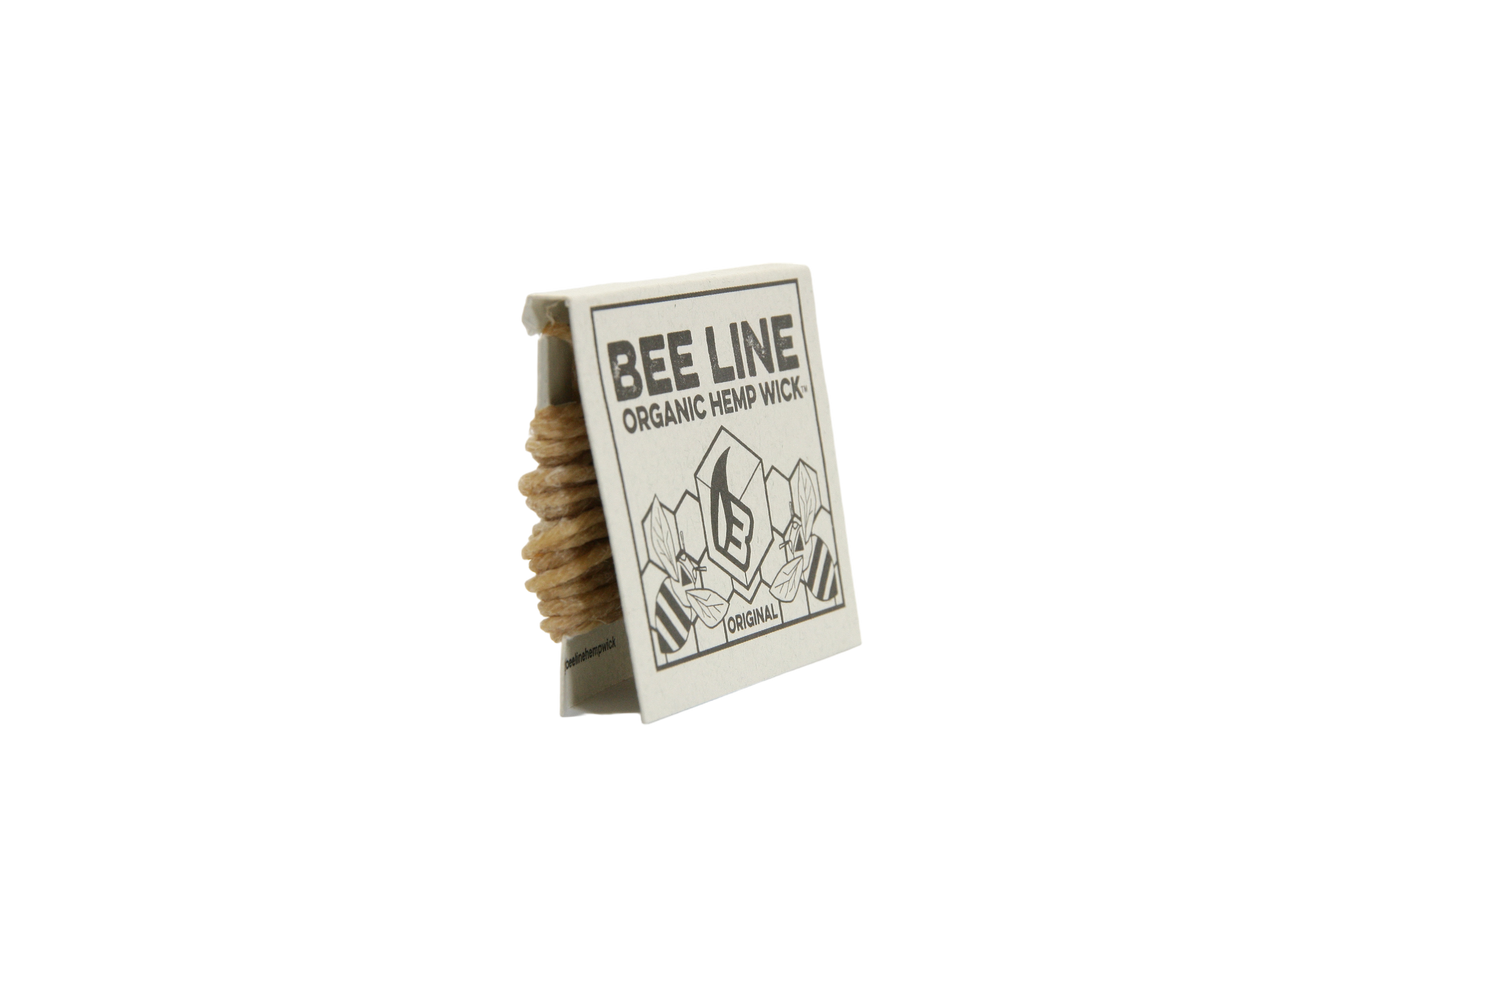 Bee Line Hemp Wick - 9 ft